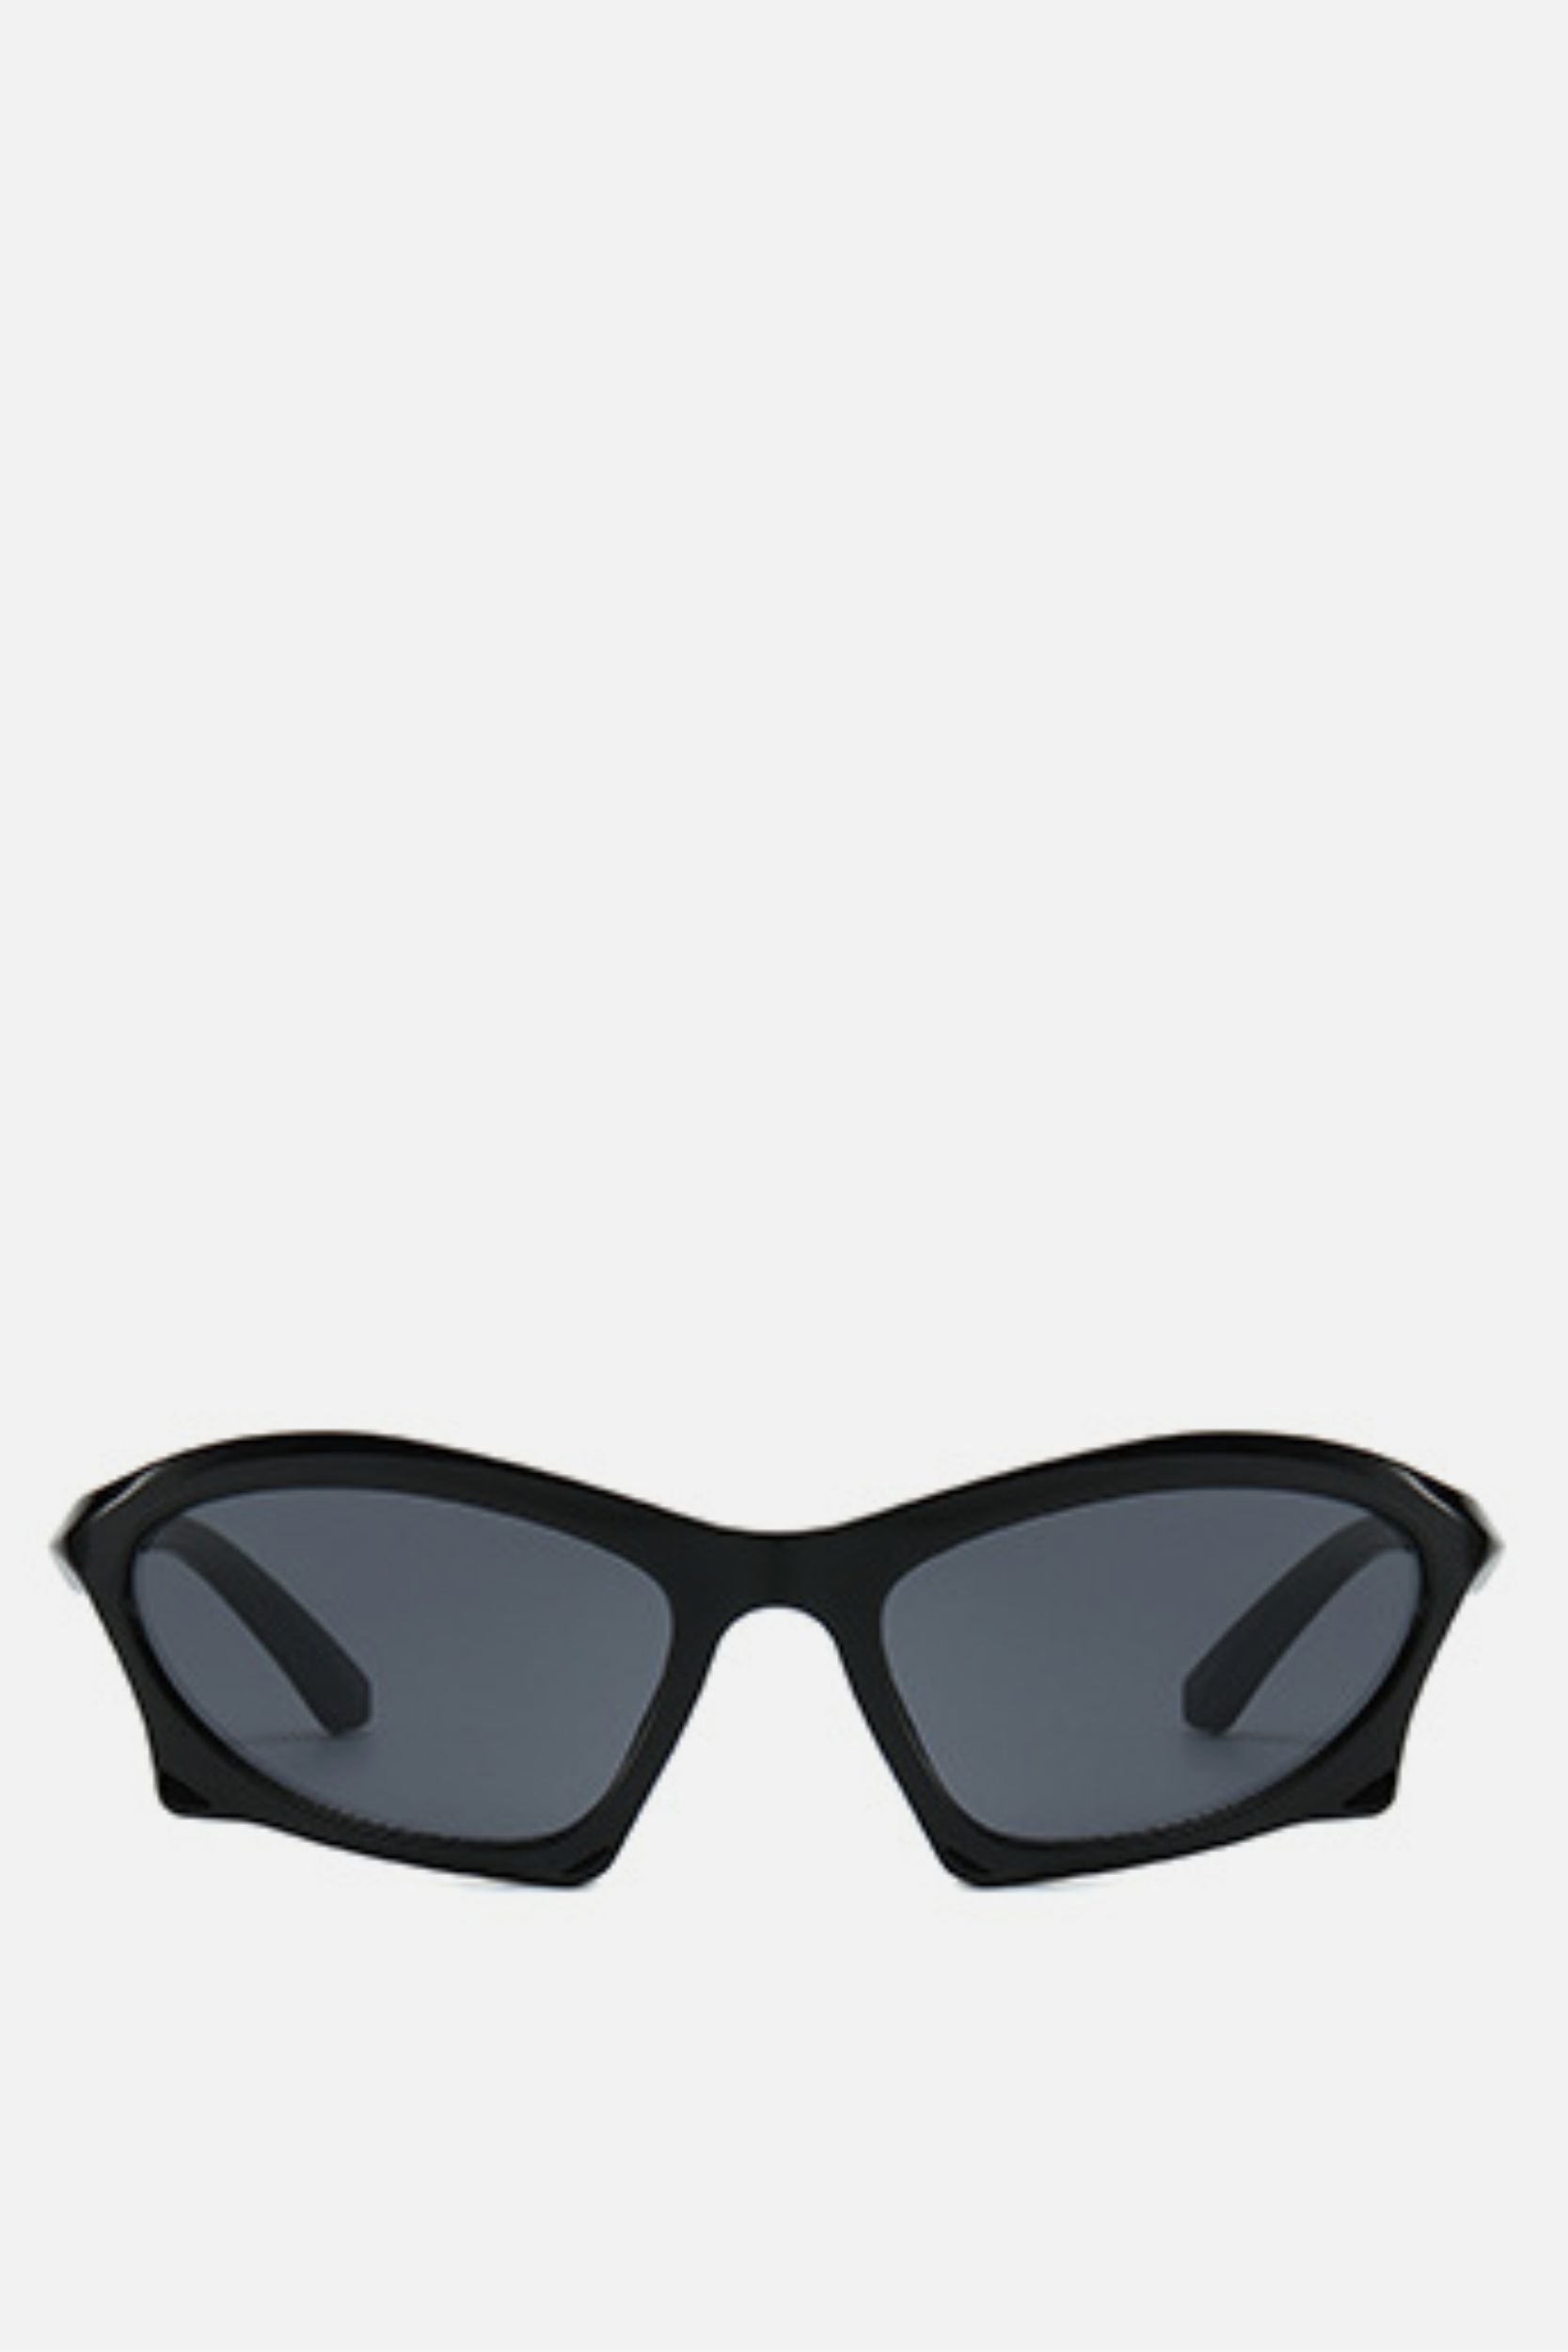 CALI Black Cat Eye Sunglasses